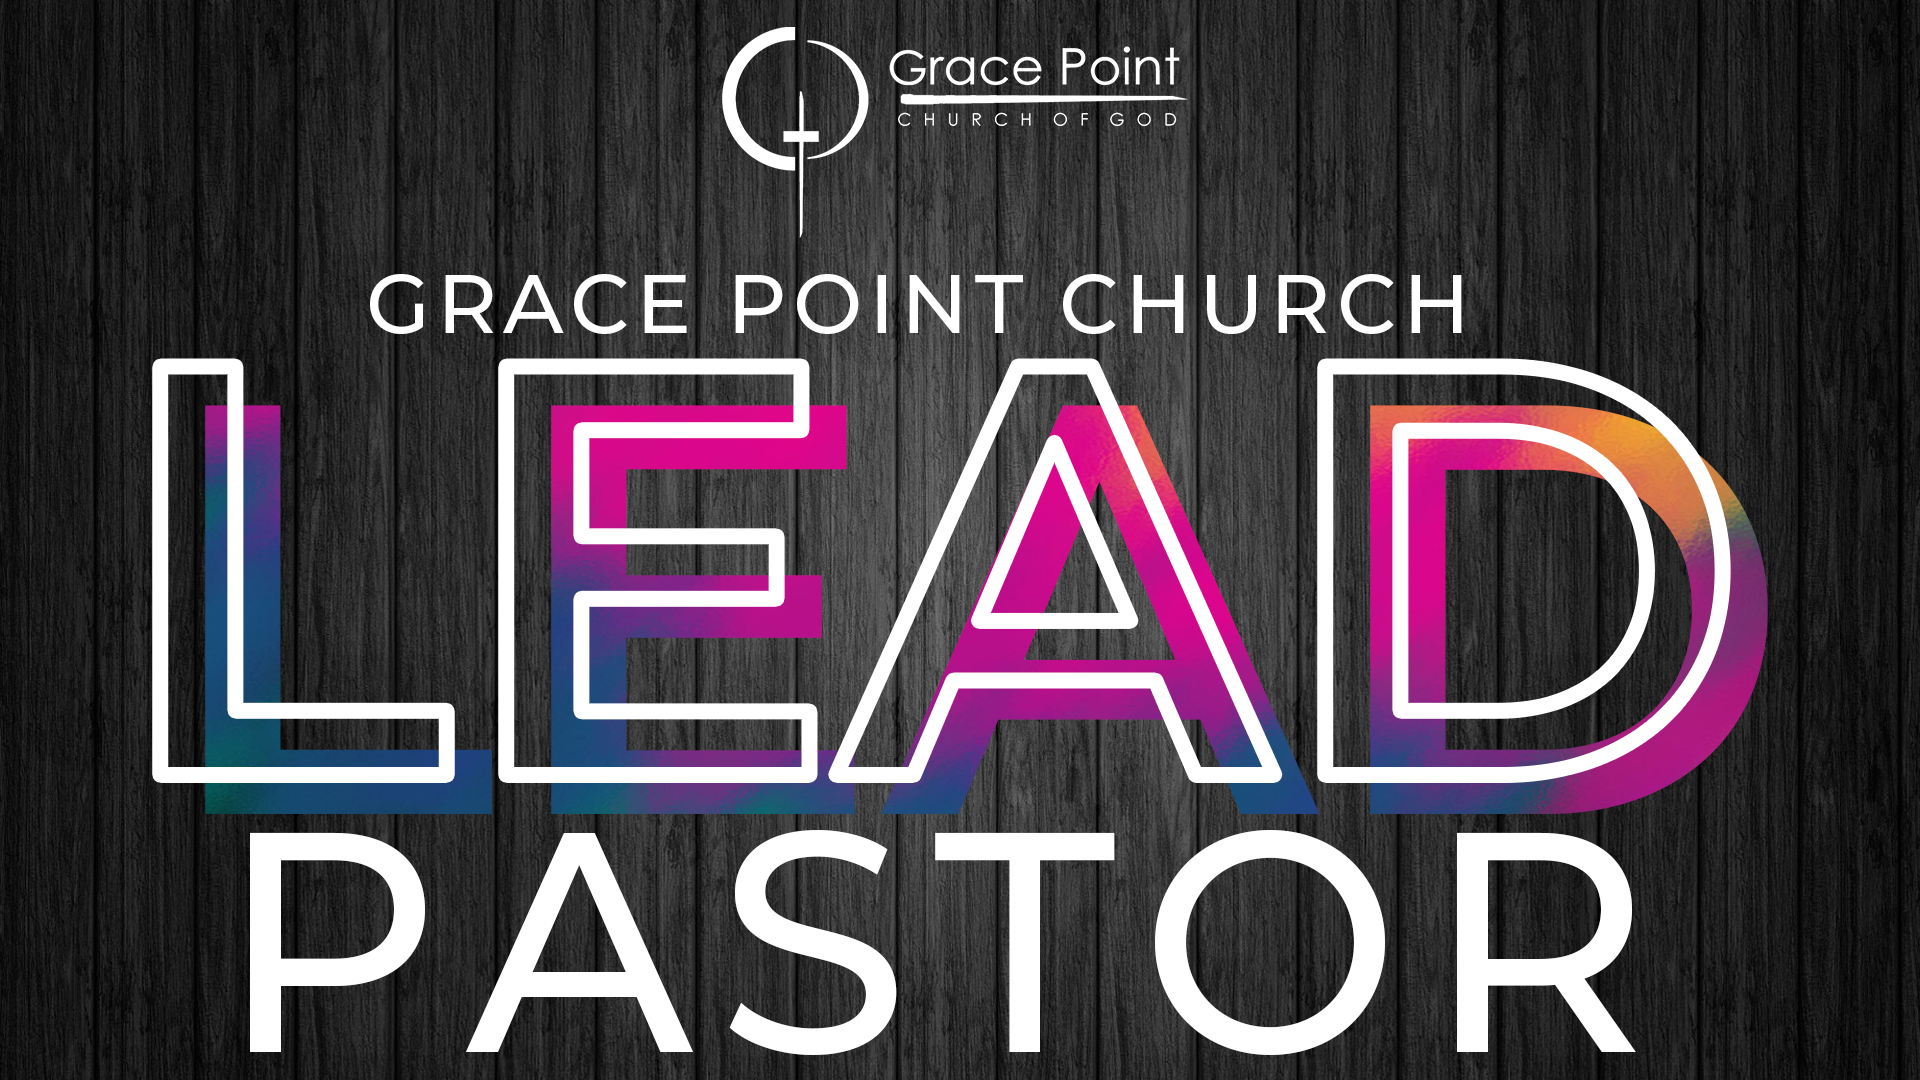 Lead Pastor Job Posting